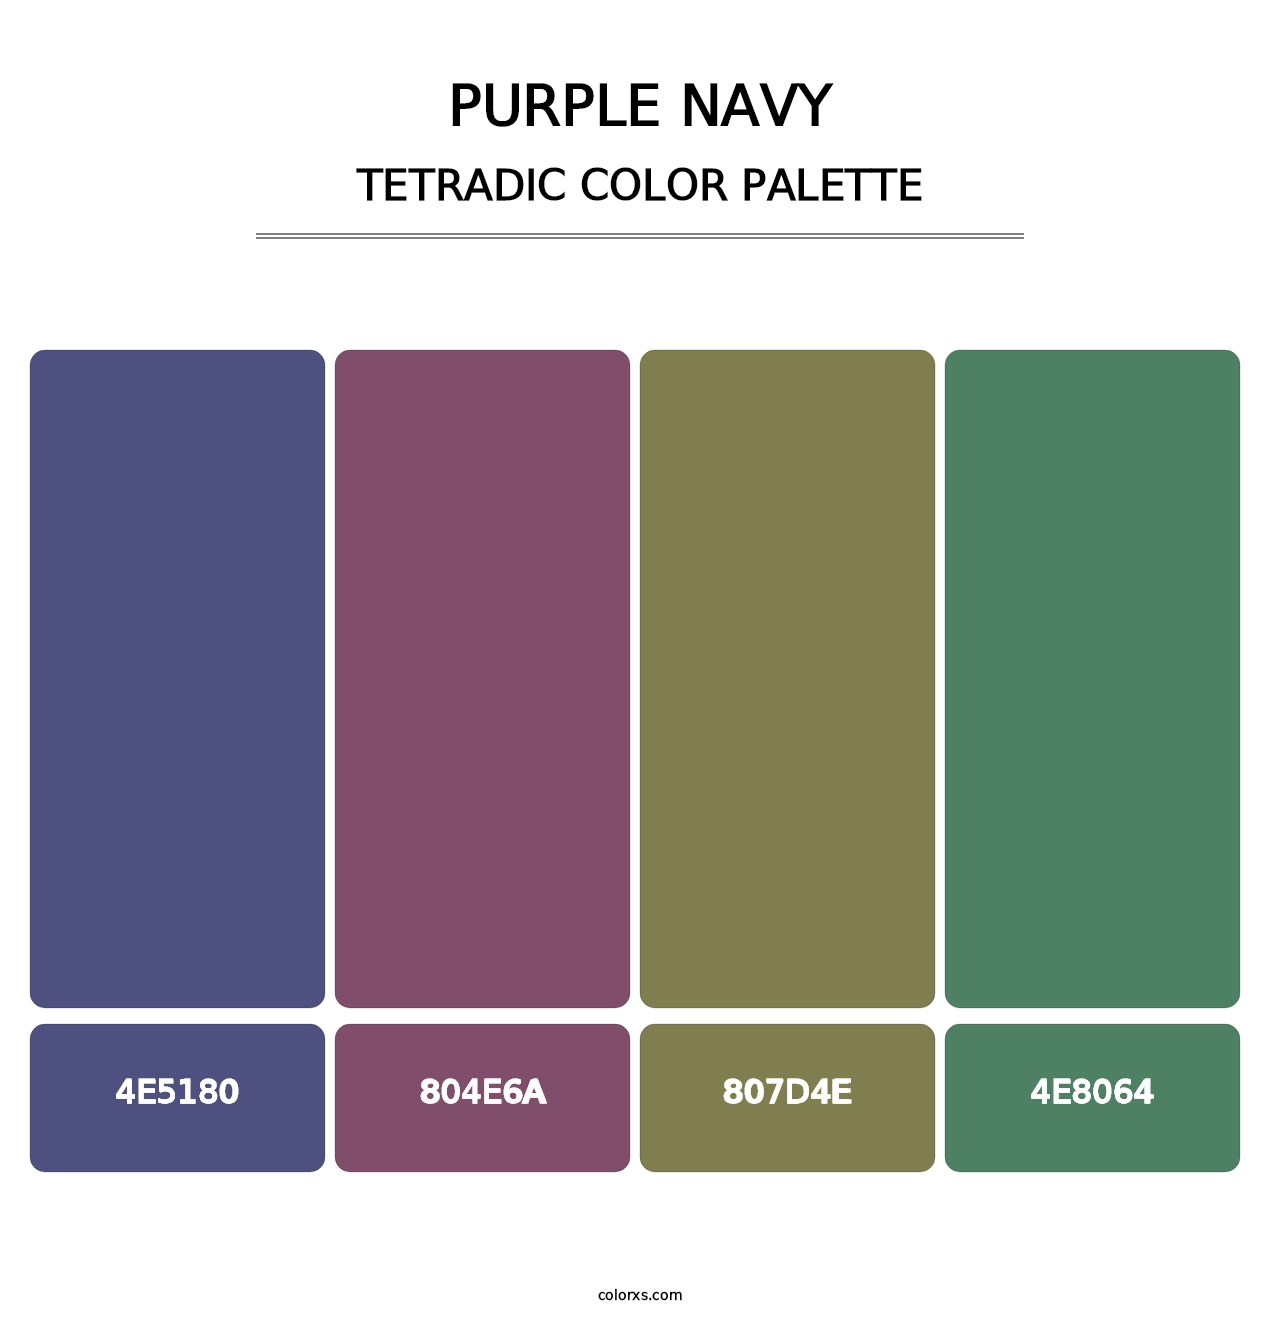 Purple Navy - Tetradic Color Palette